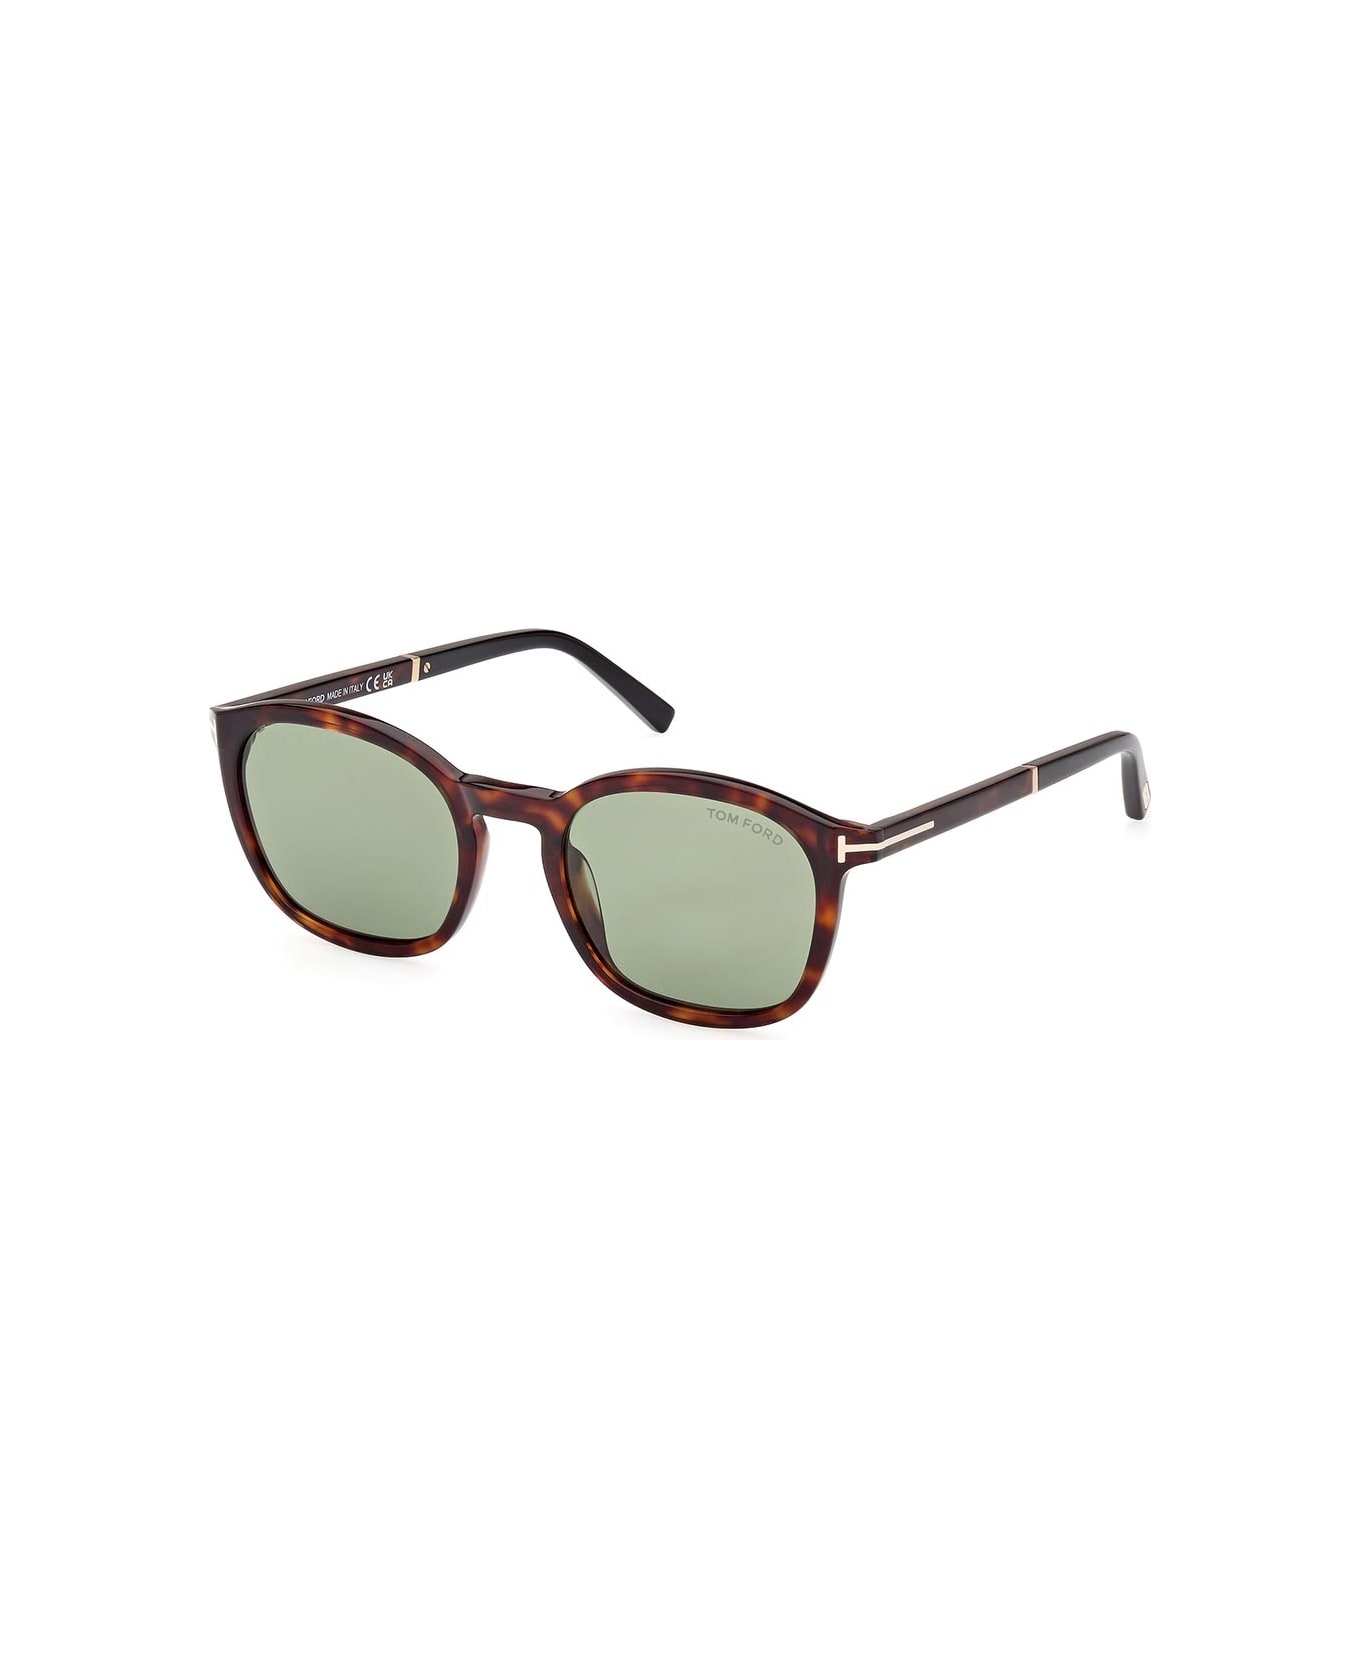 Tom Ford Eyewear Sunglasses - Marrone/Verde